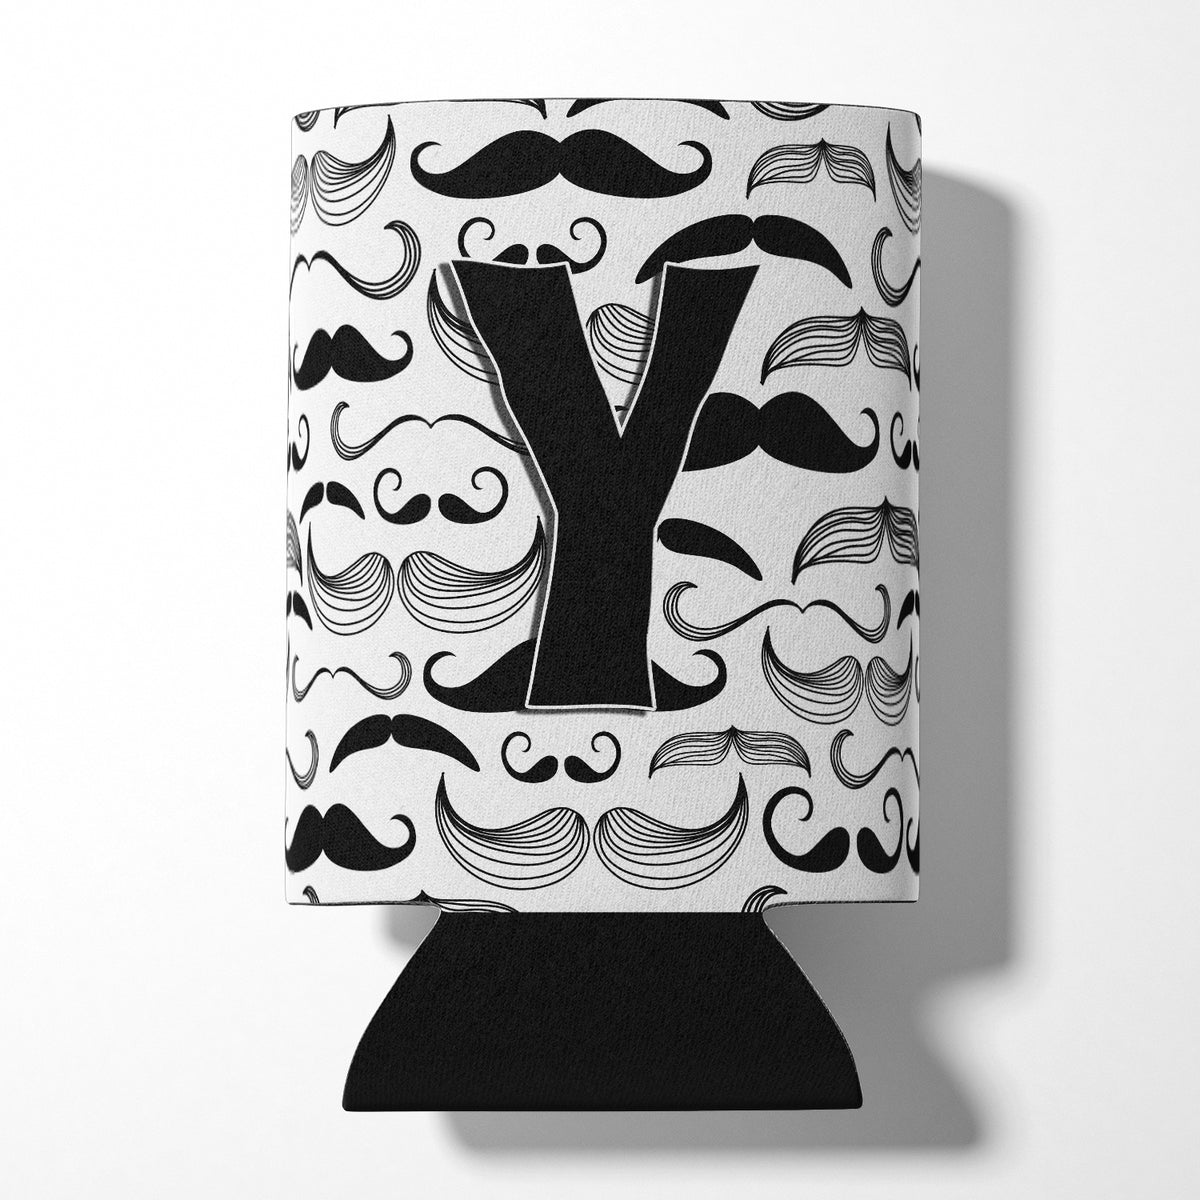 Letter Y Moustache Initial Can or Bottle Hugger CJ2009-YCC